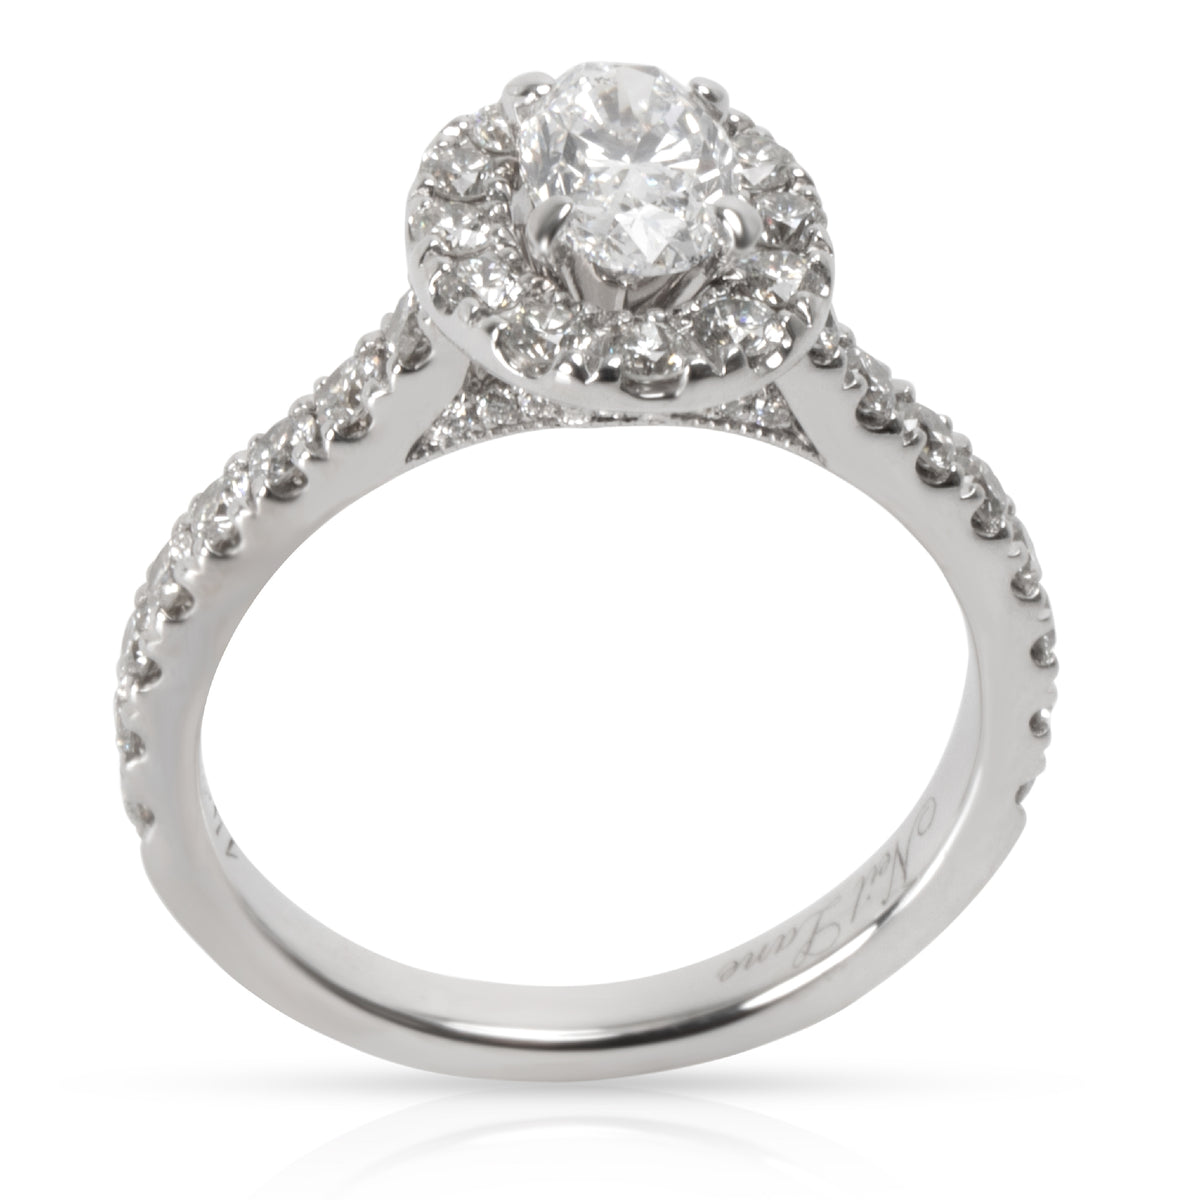 Neil Lane Oval Diamond Engagement Ring in  White Gold I SI2-I1 1.50 CTW